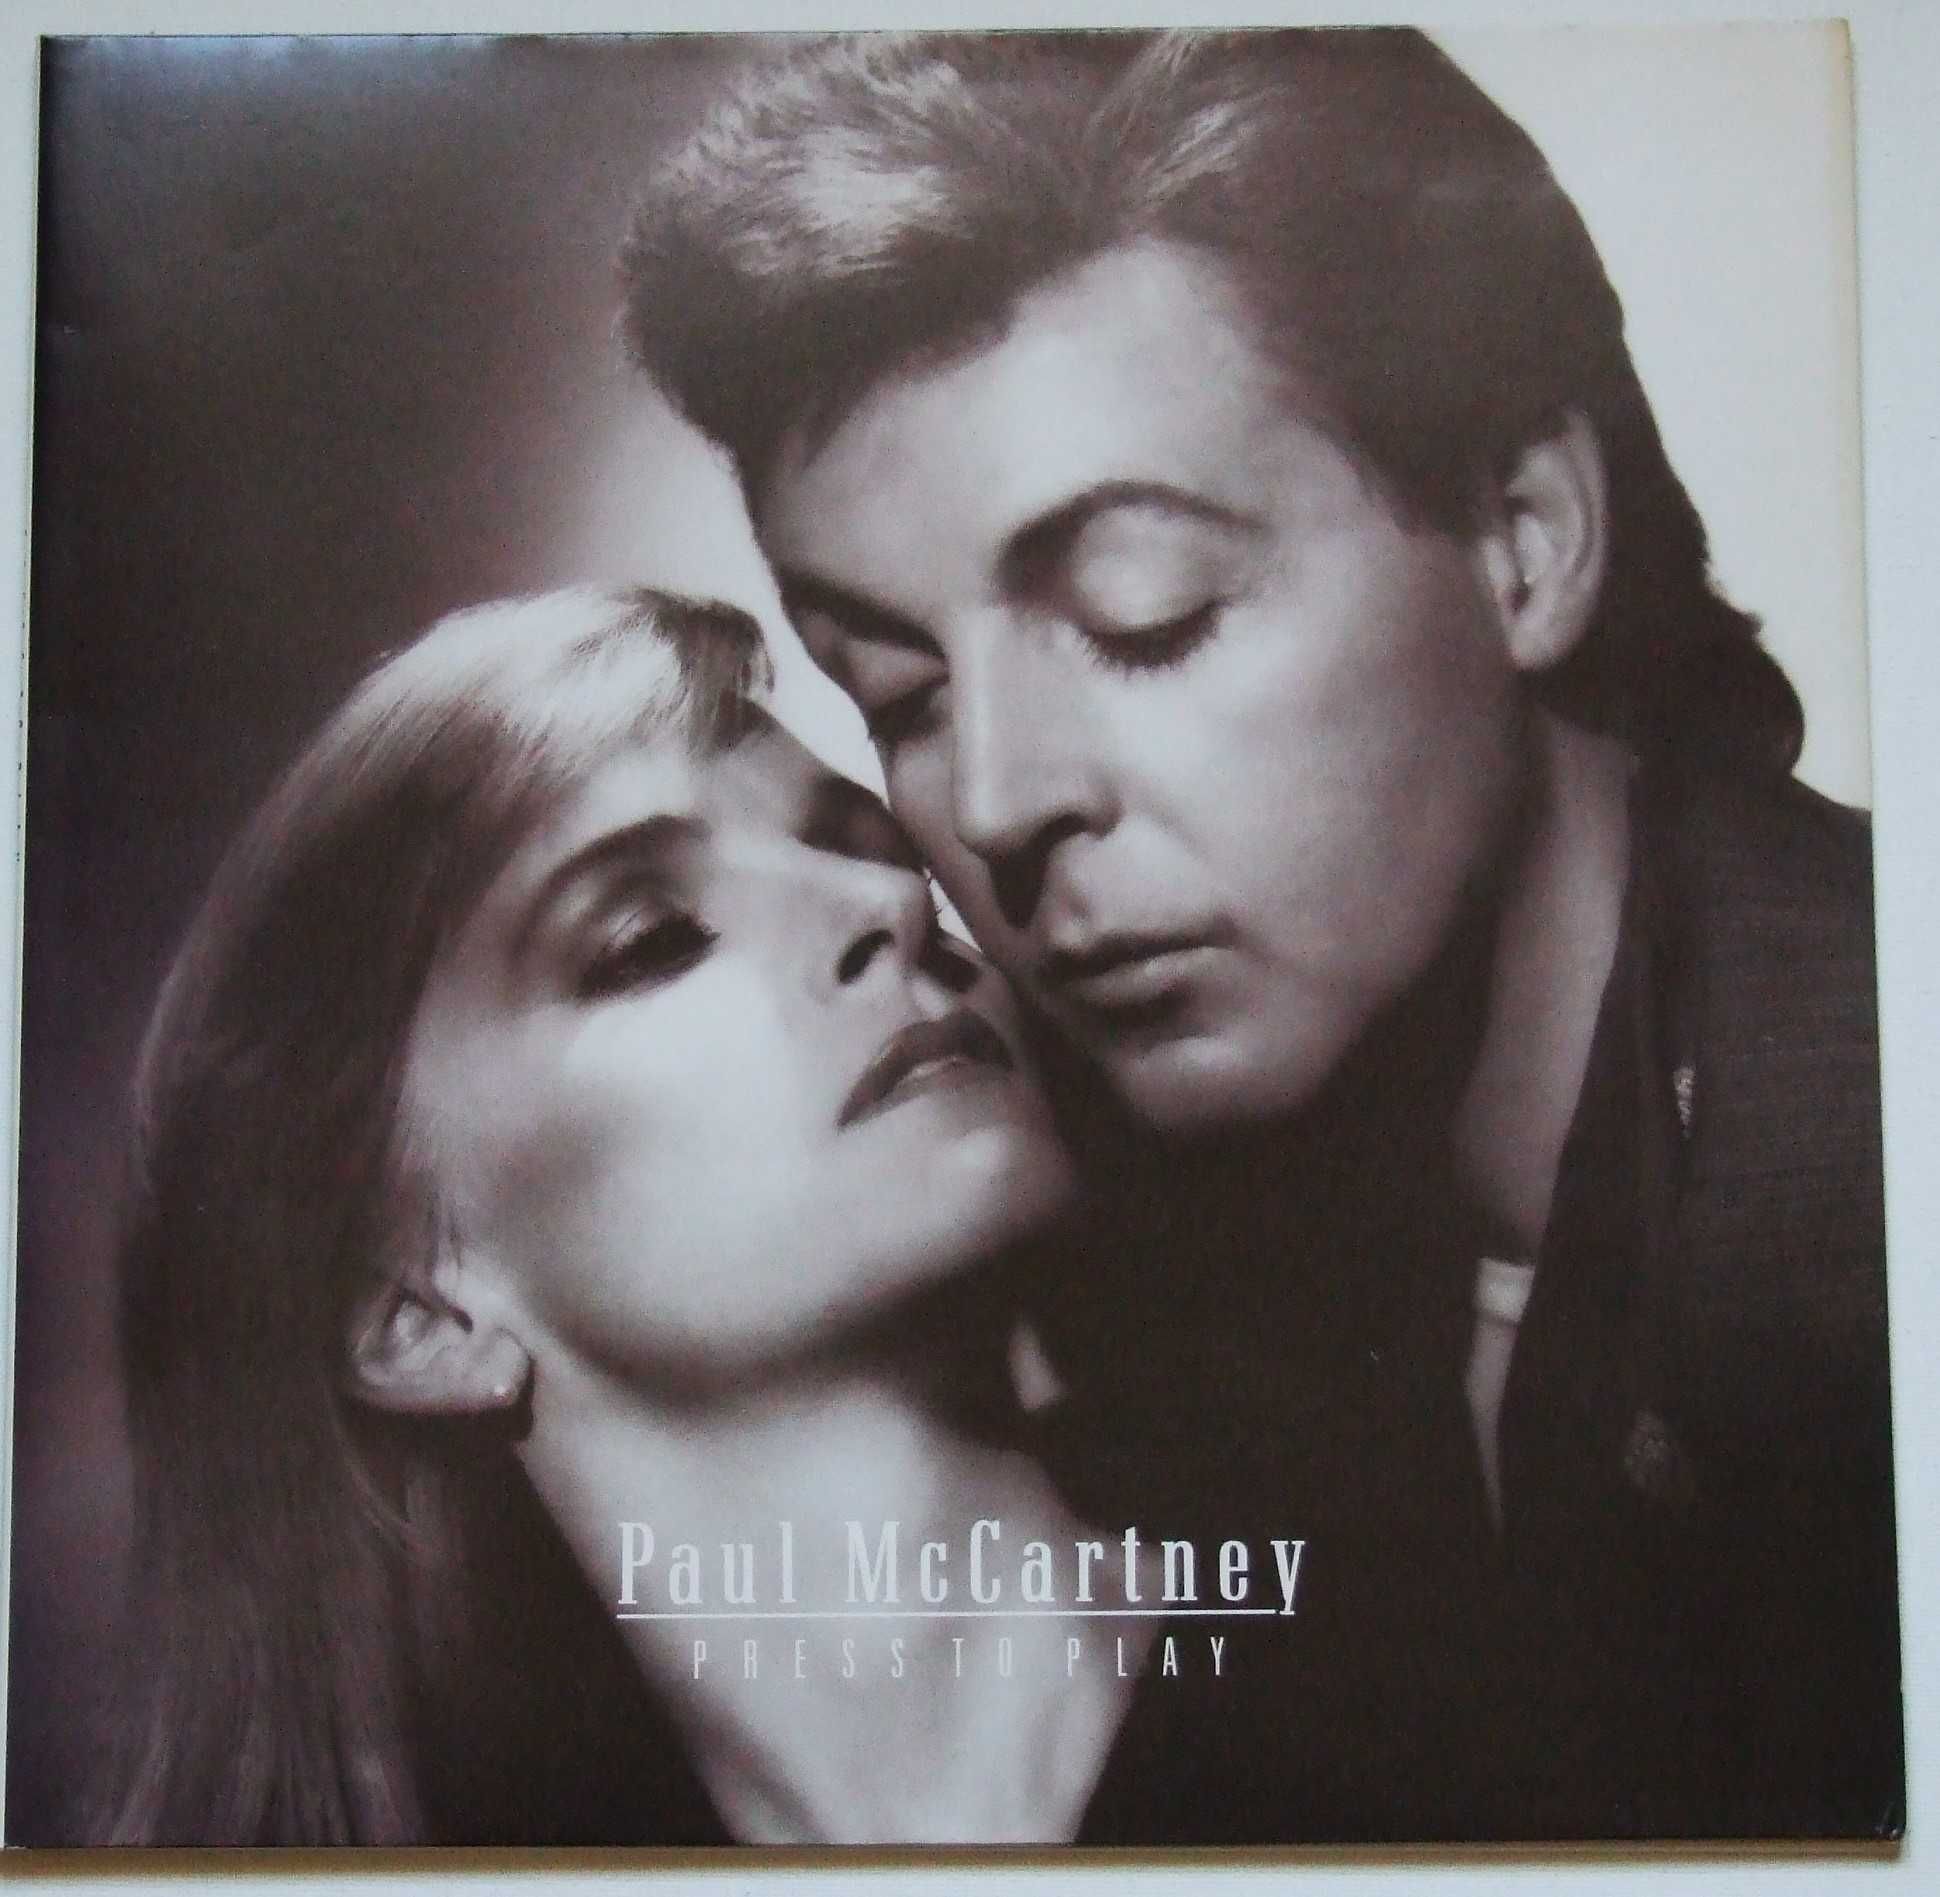 Paul McCartney – Press To Play